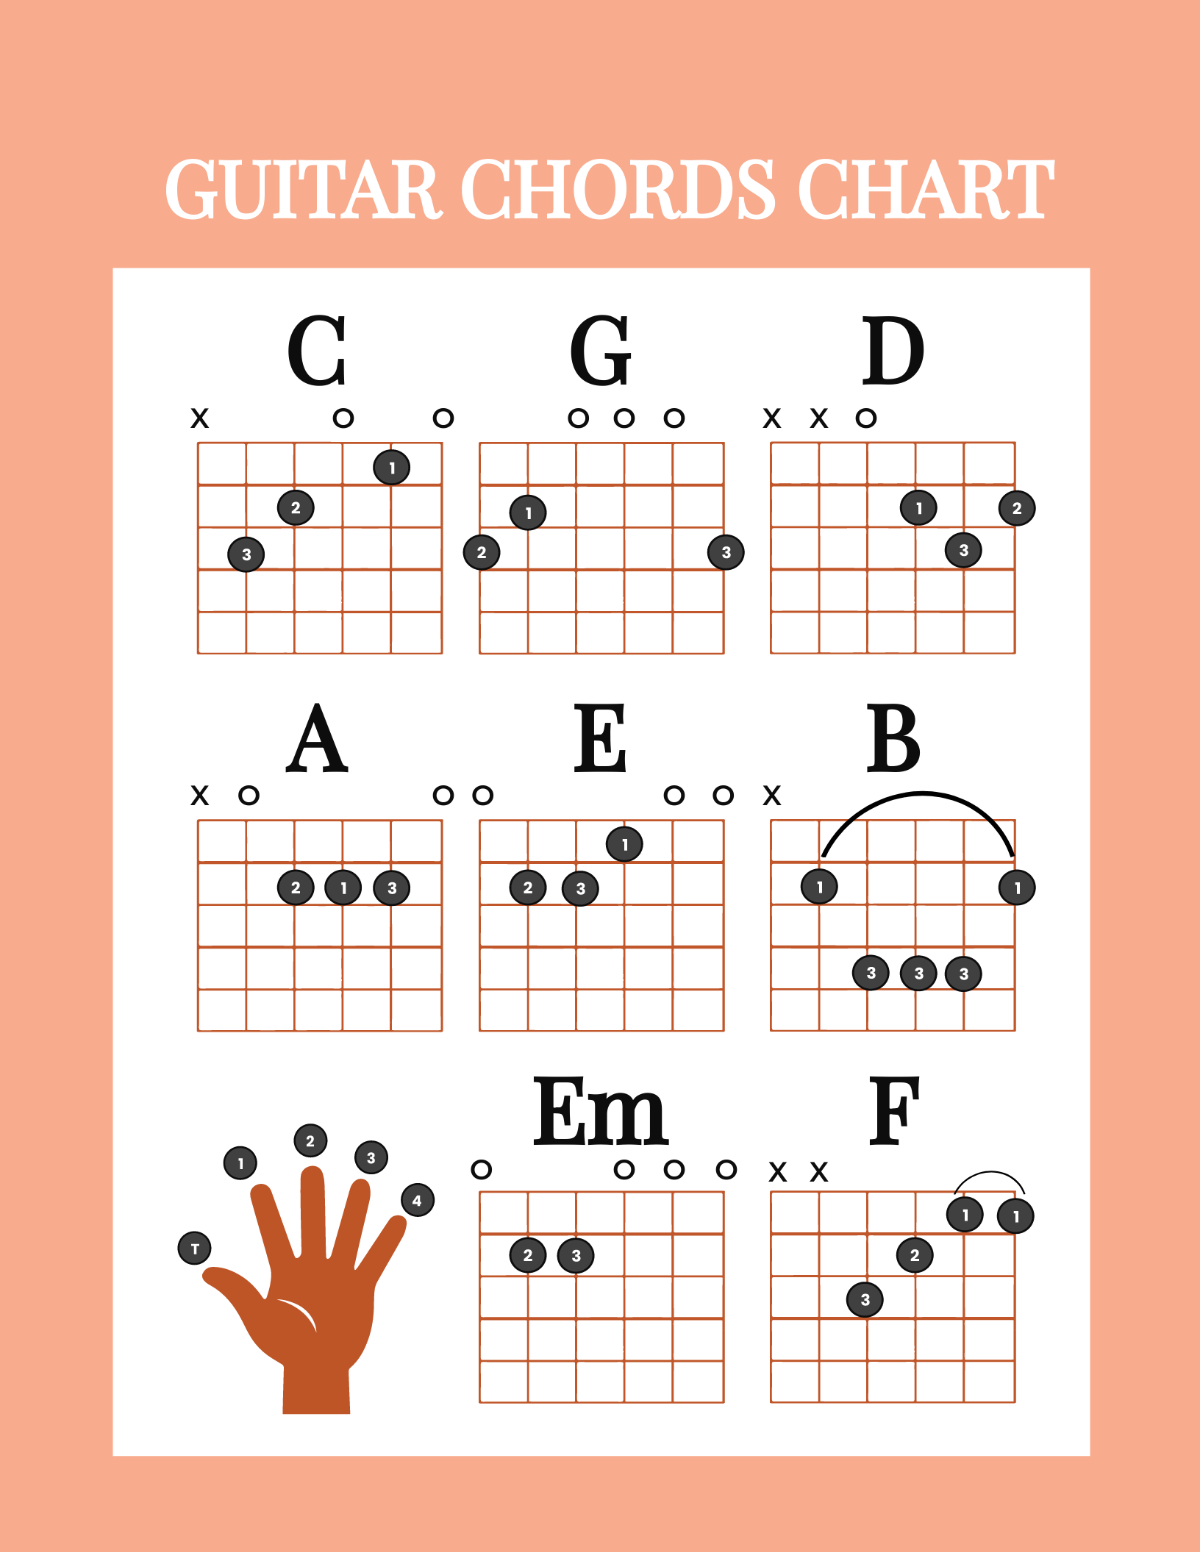 Guitar Chords Chart Template